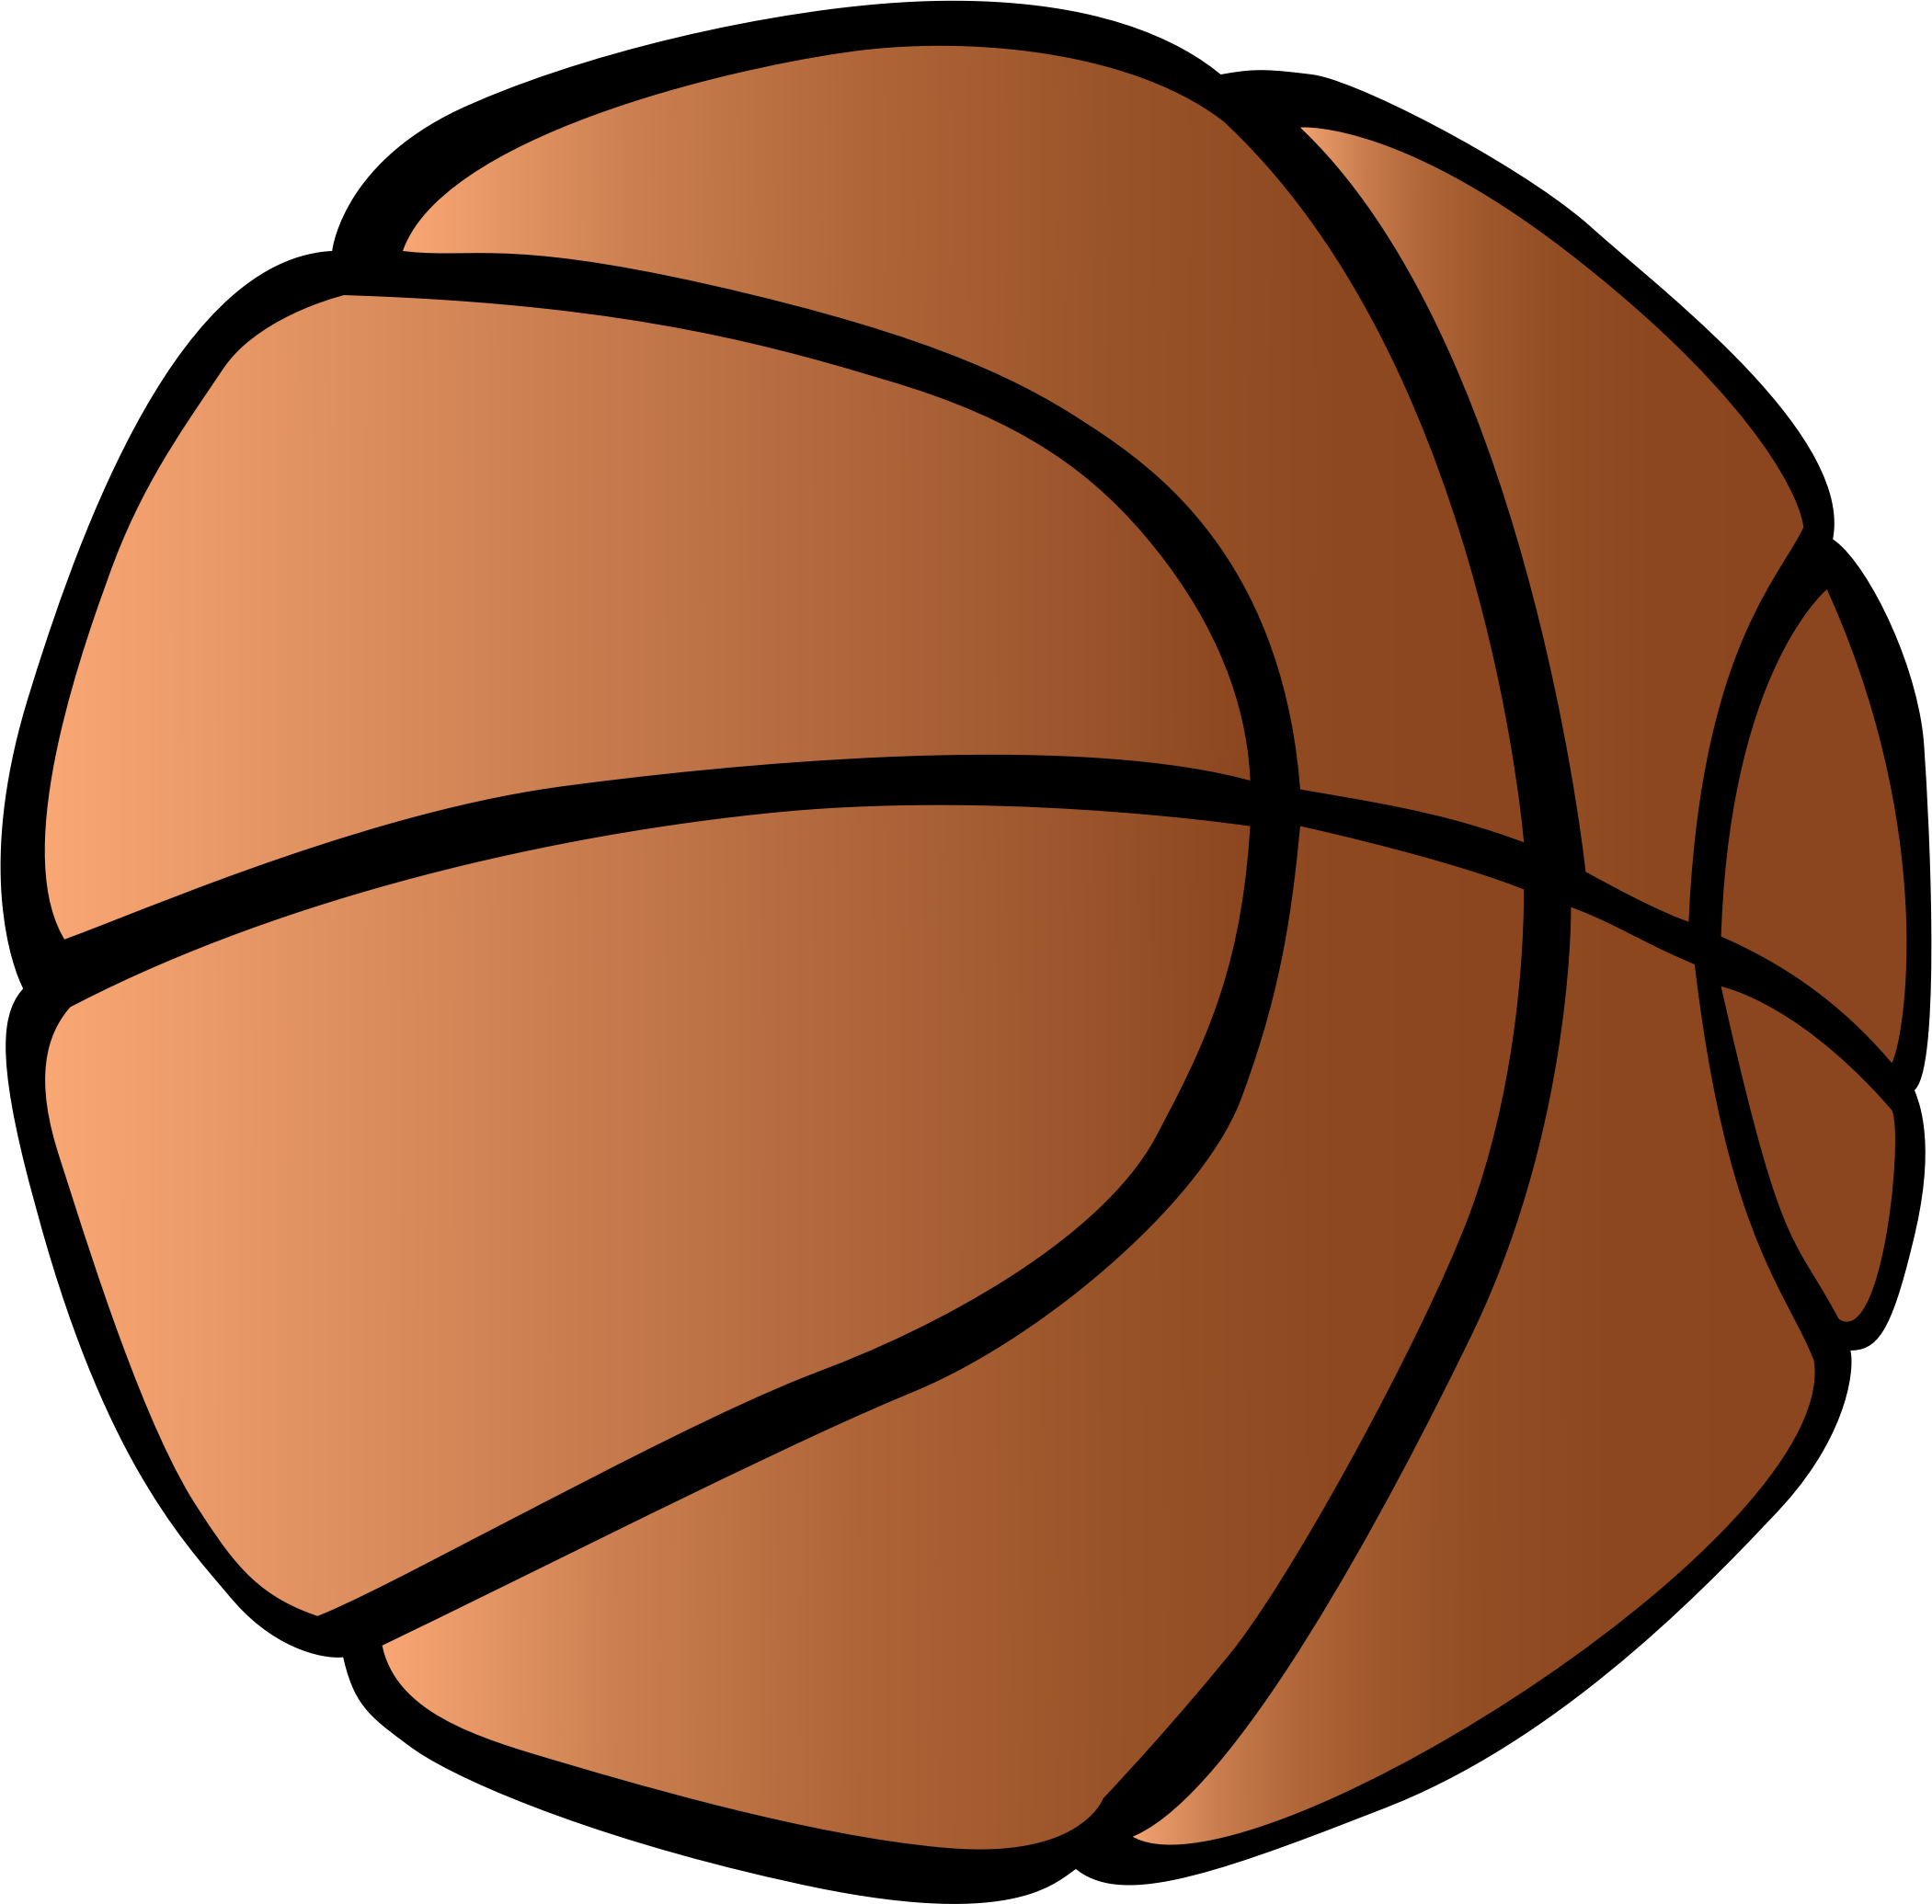 sports clipart basketball - photo #36